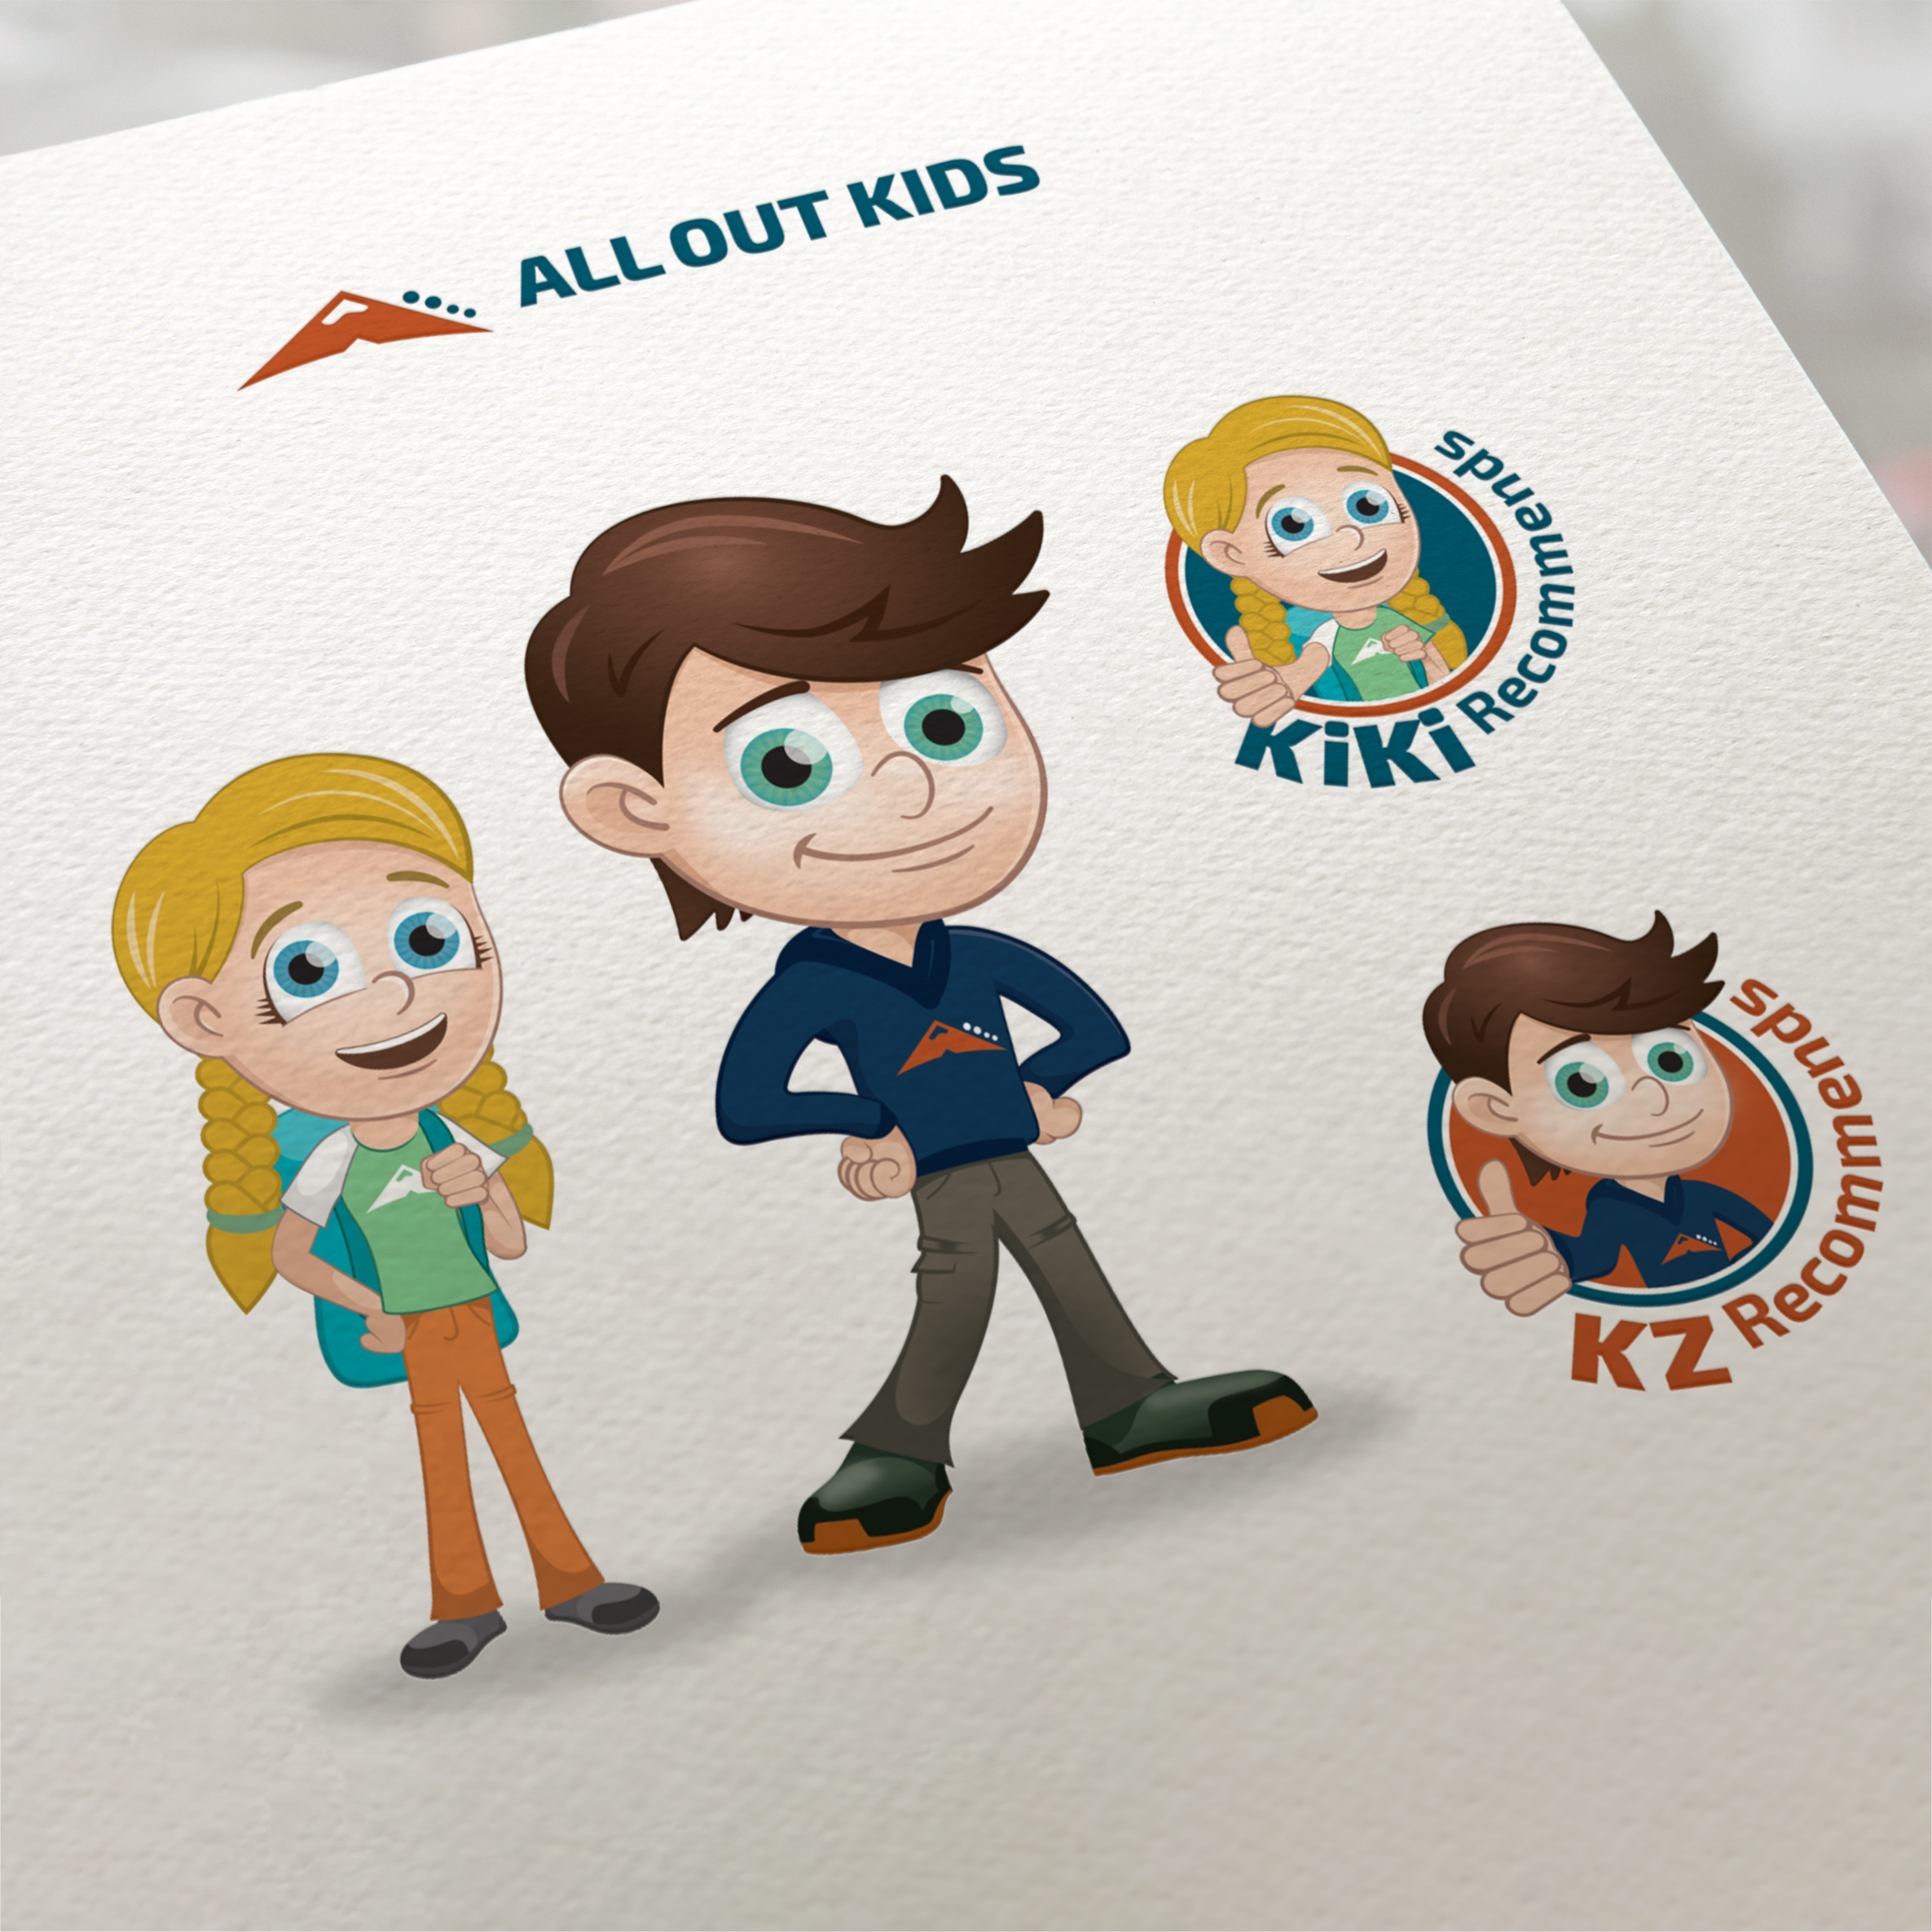 Kiki & KZ Character Design for Allout Kids